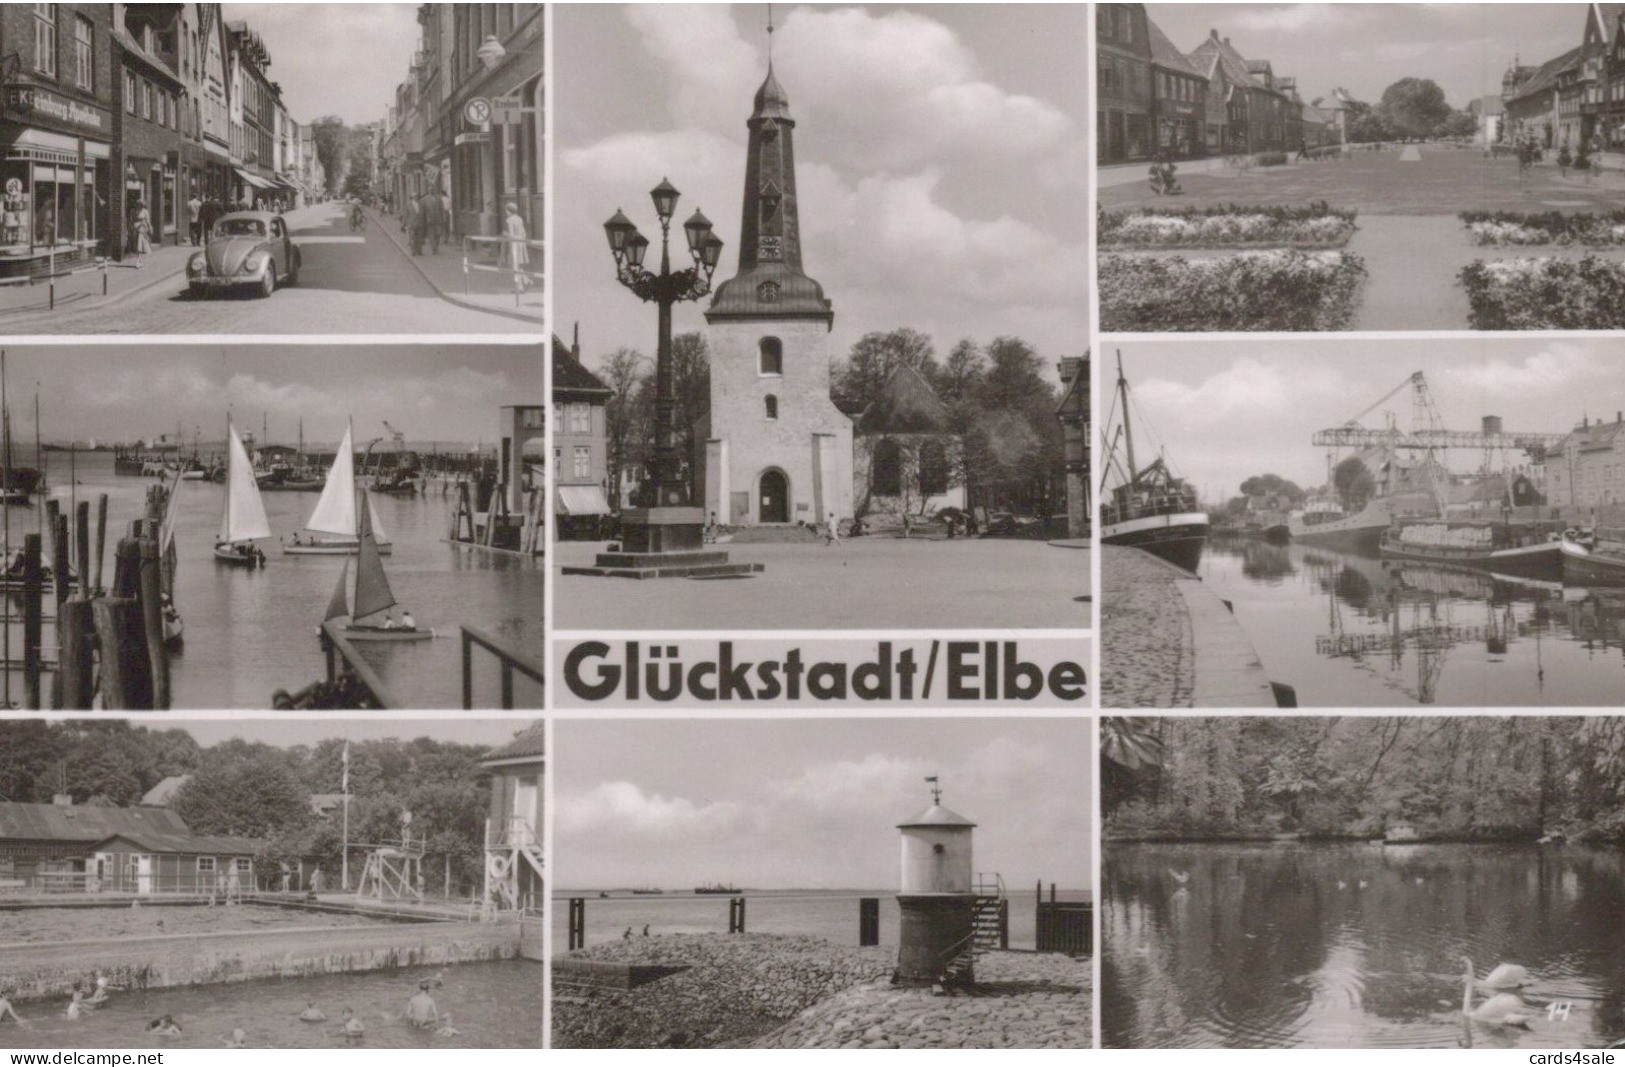 Glückstadt/Elbe - Glückstadt